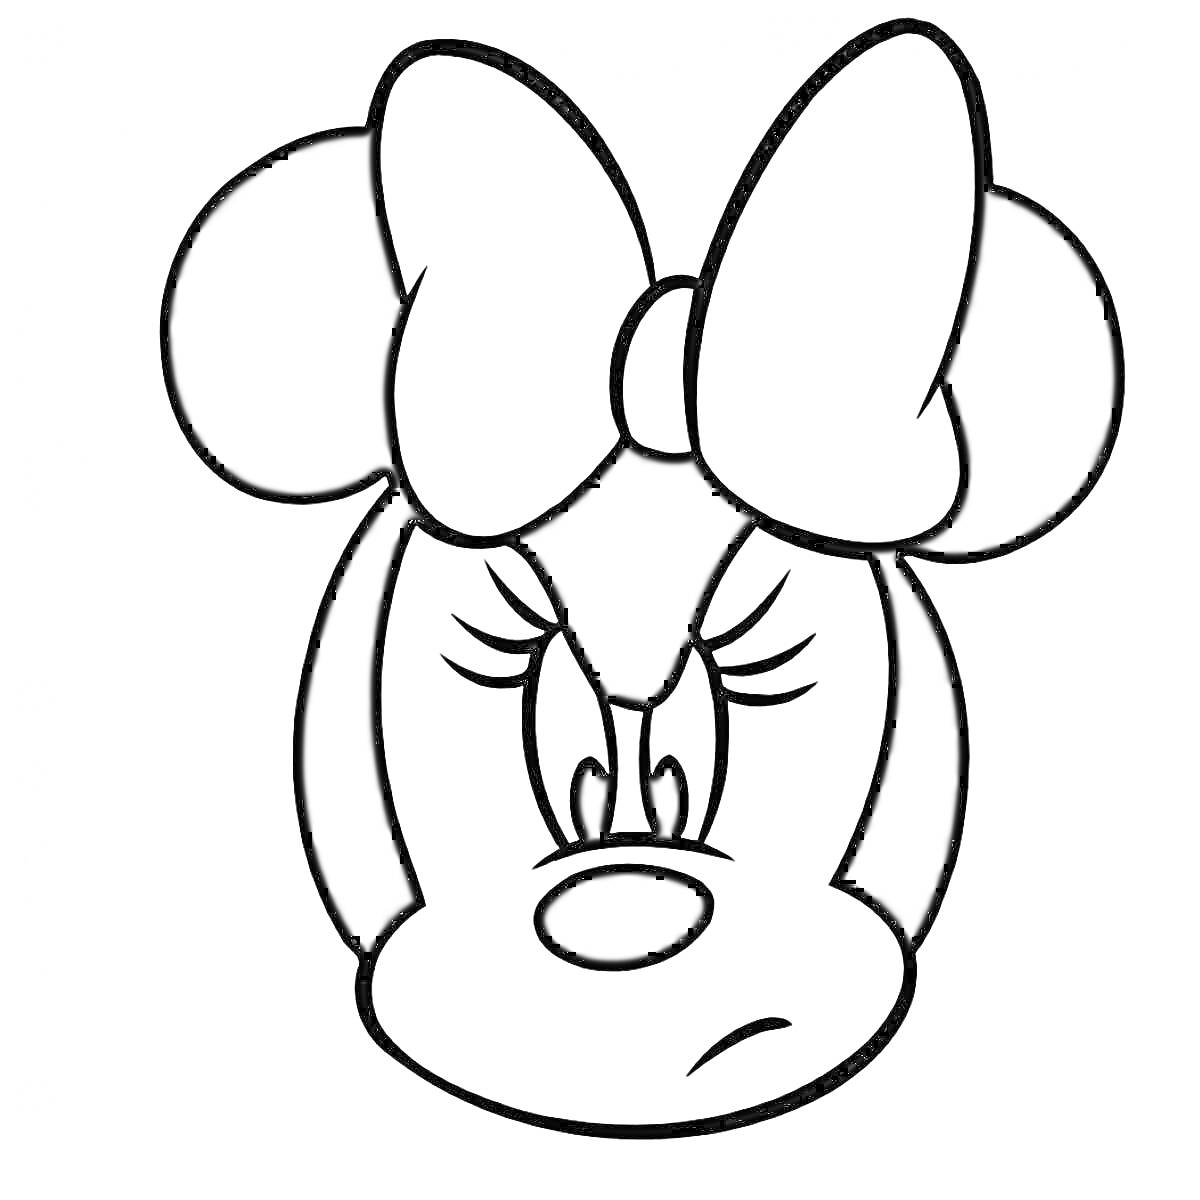 РаскраскаМинни Маус с бантом - голова, уши, глаза, бант, нос